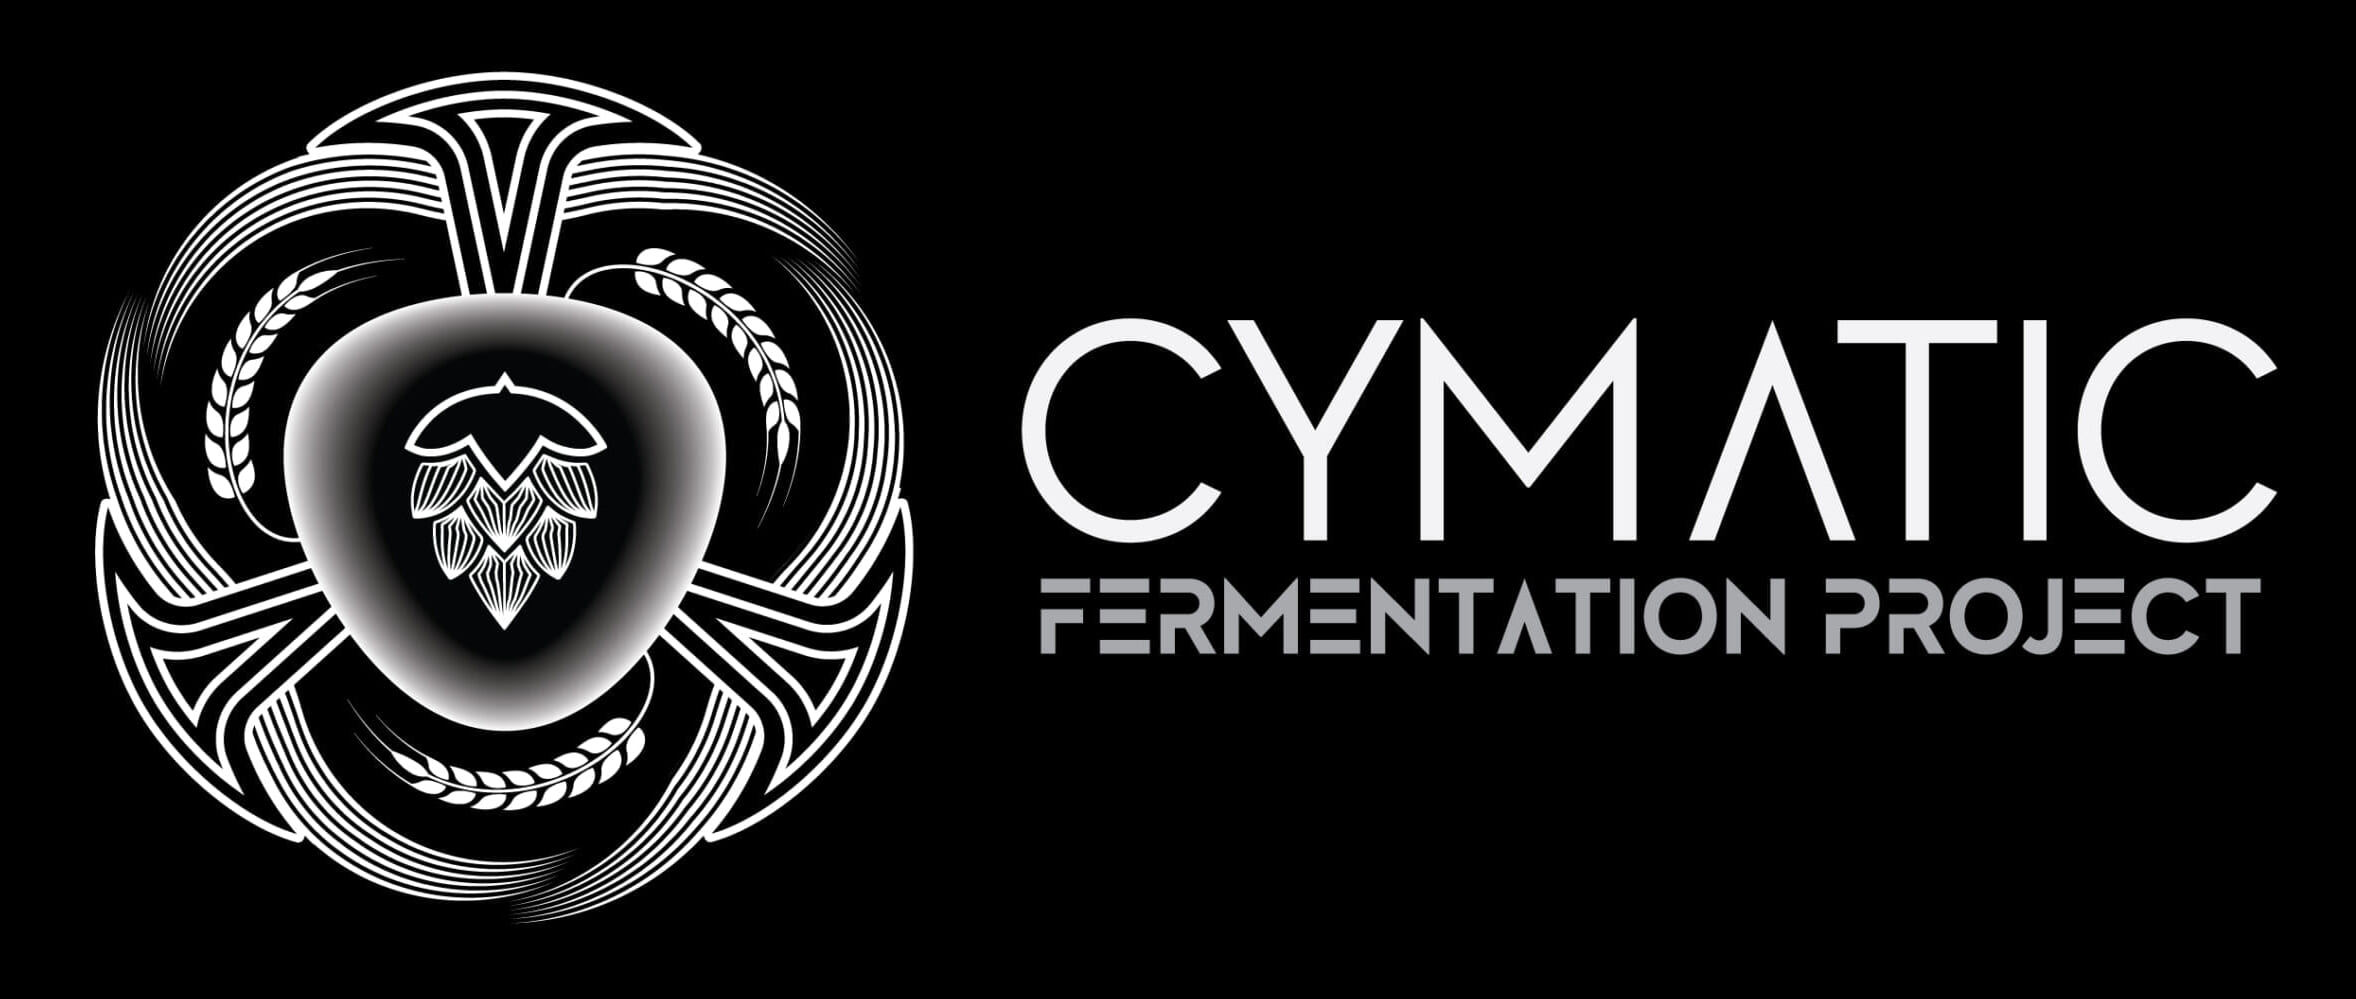 Cymatic Fermentation Project